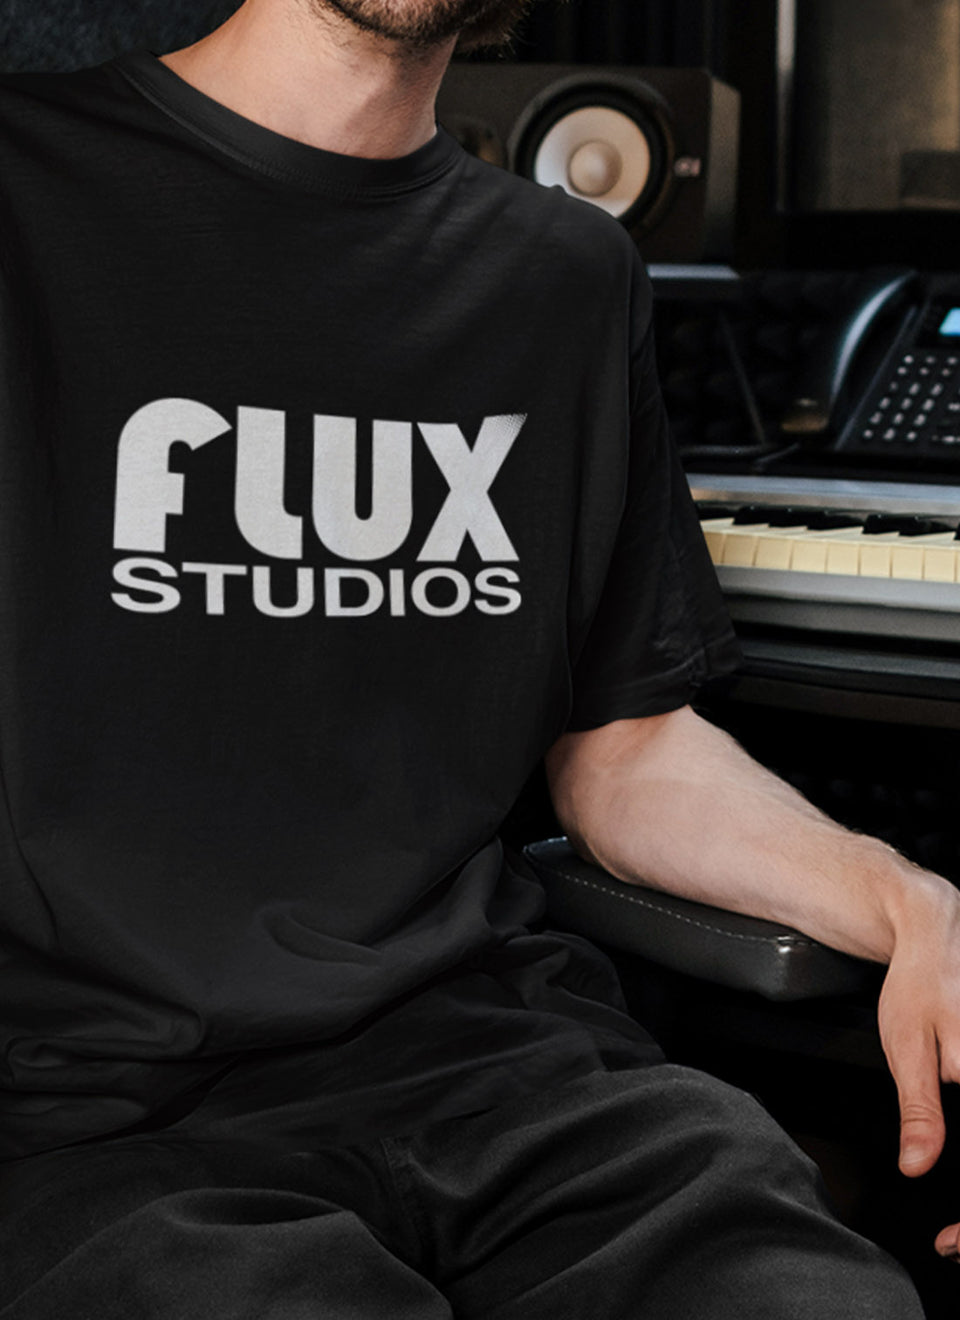 Flux Studios Logo